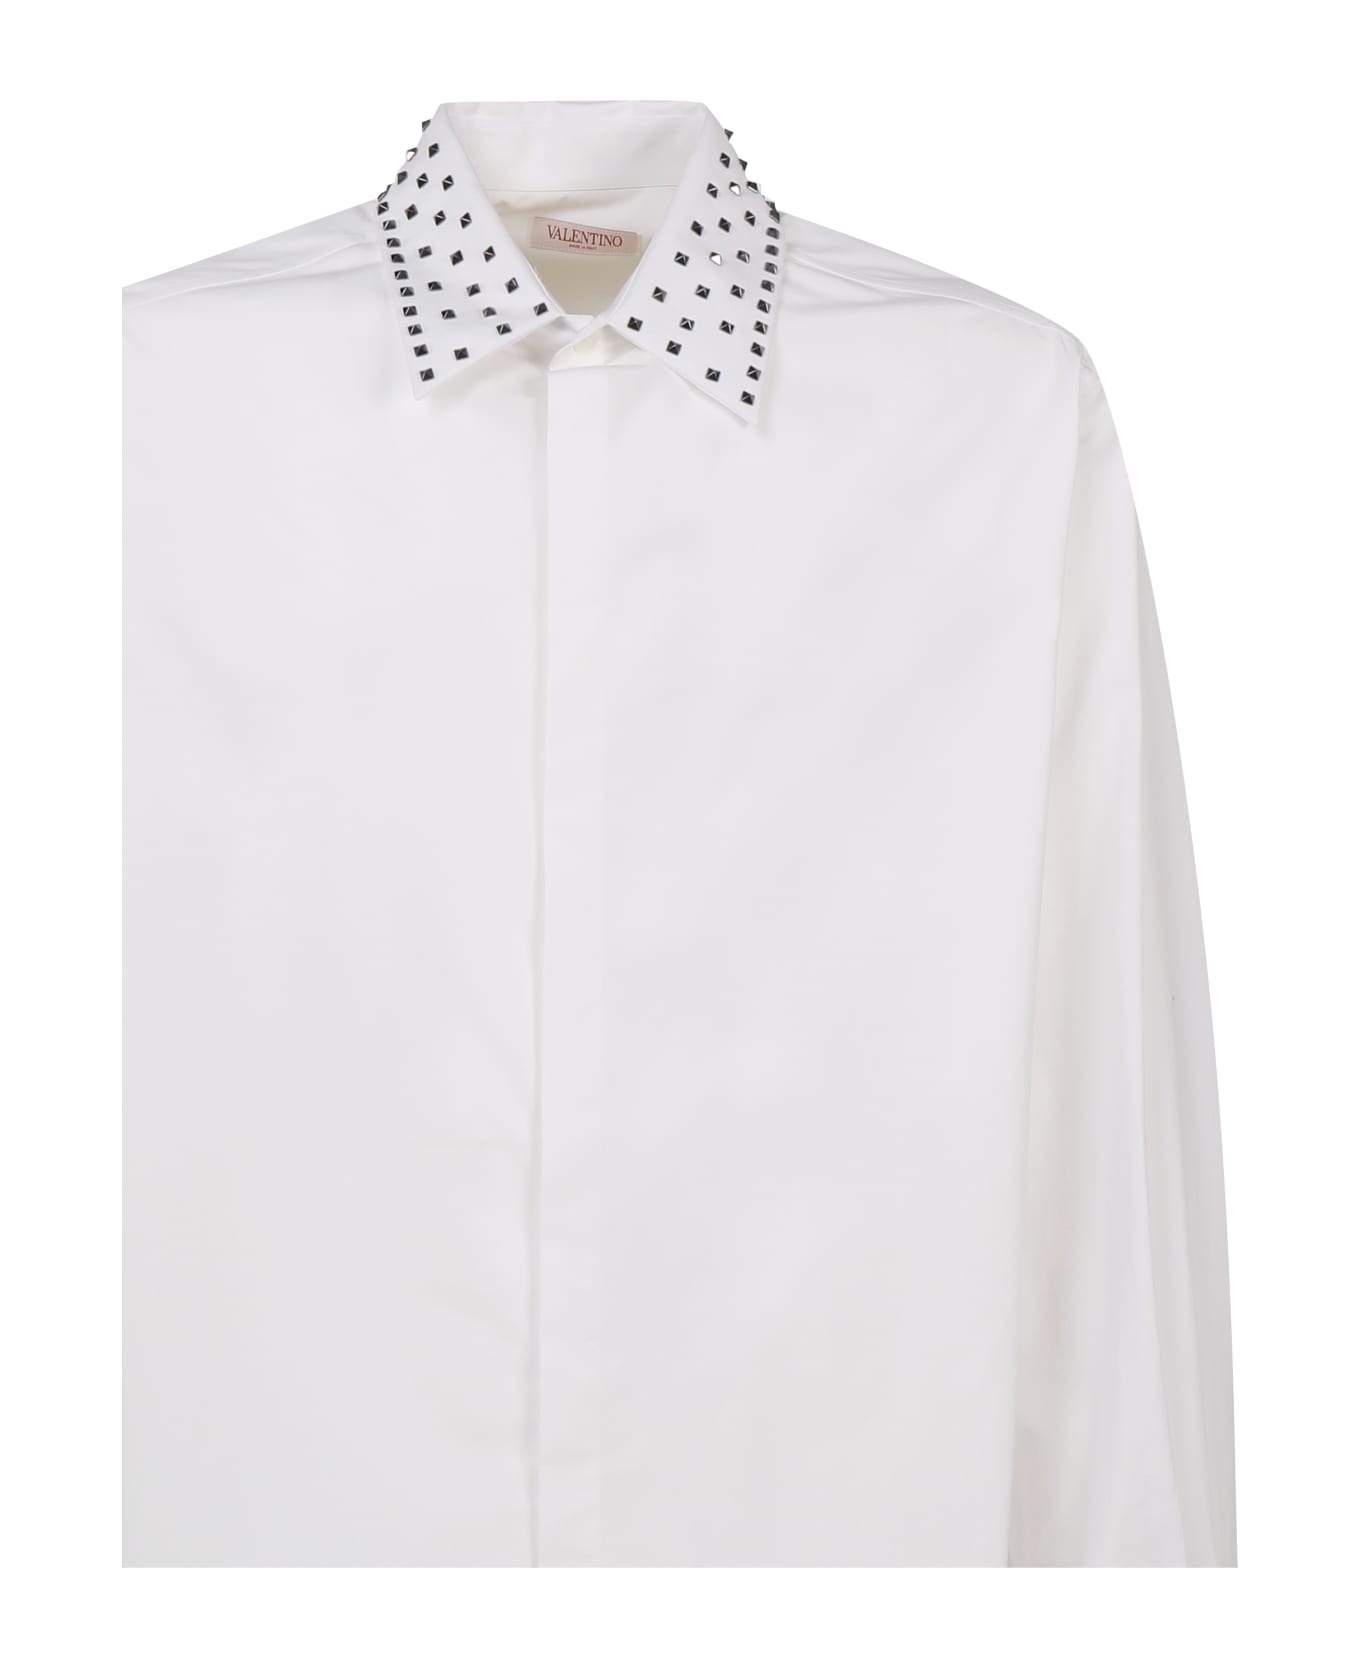 Valentino Garavani Long-sleeved Shirt With Stud Collar - Optical white シャツ